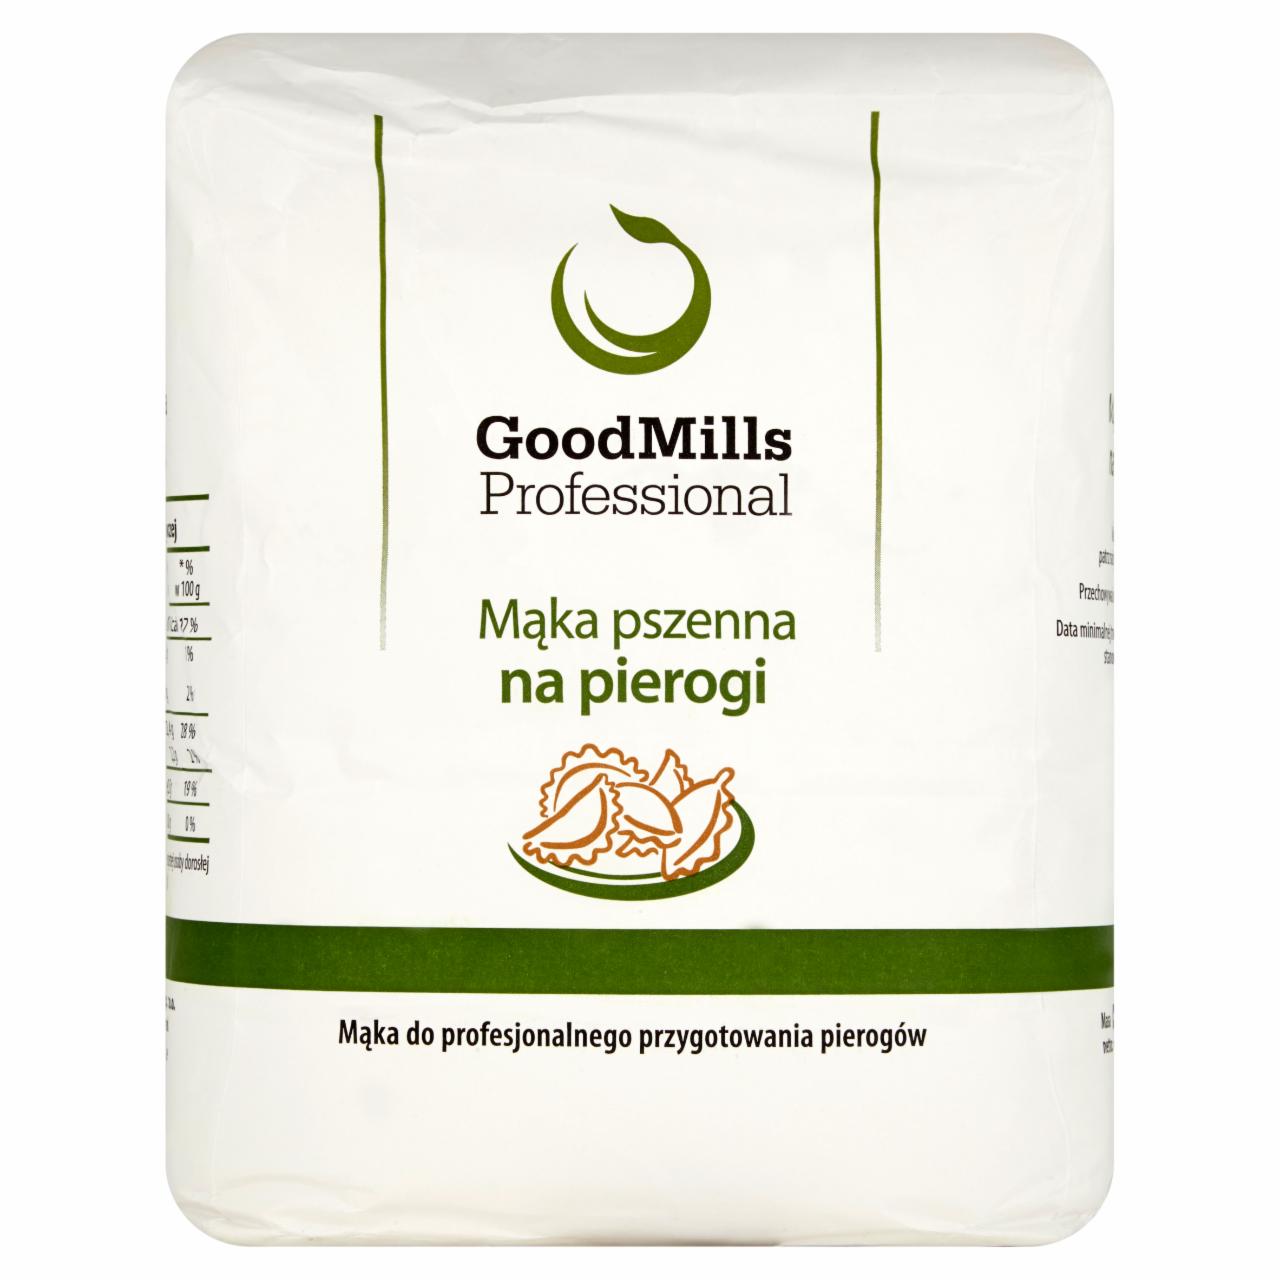 Zdjęcia - GoodMills Professional Mąka pszenna na pierogi typ 480 5 kg